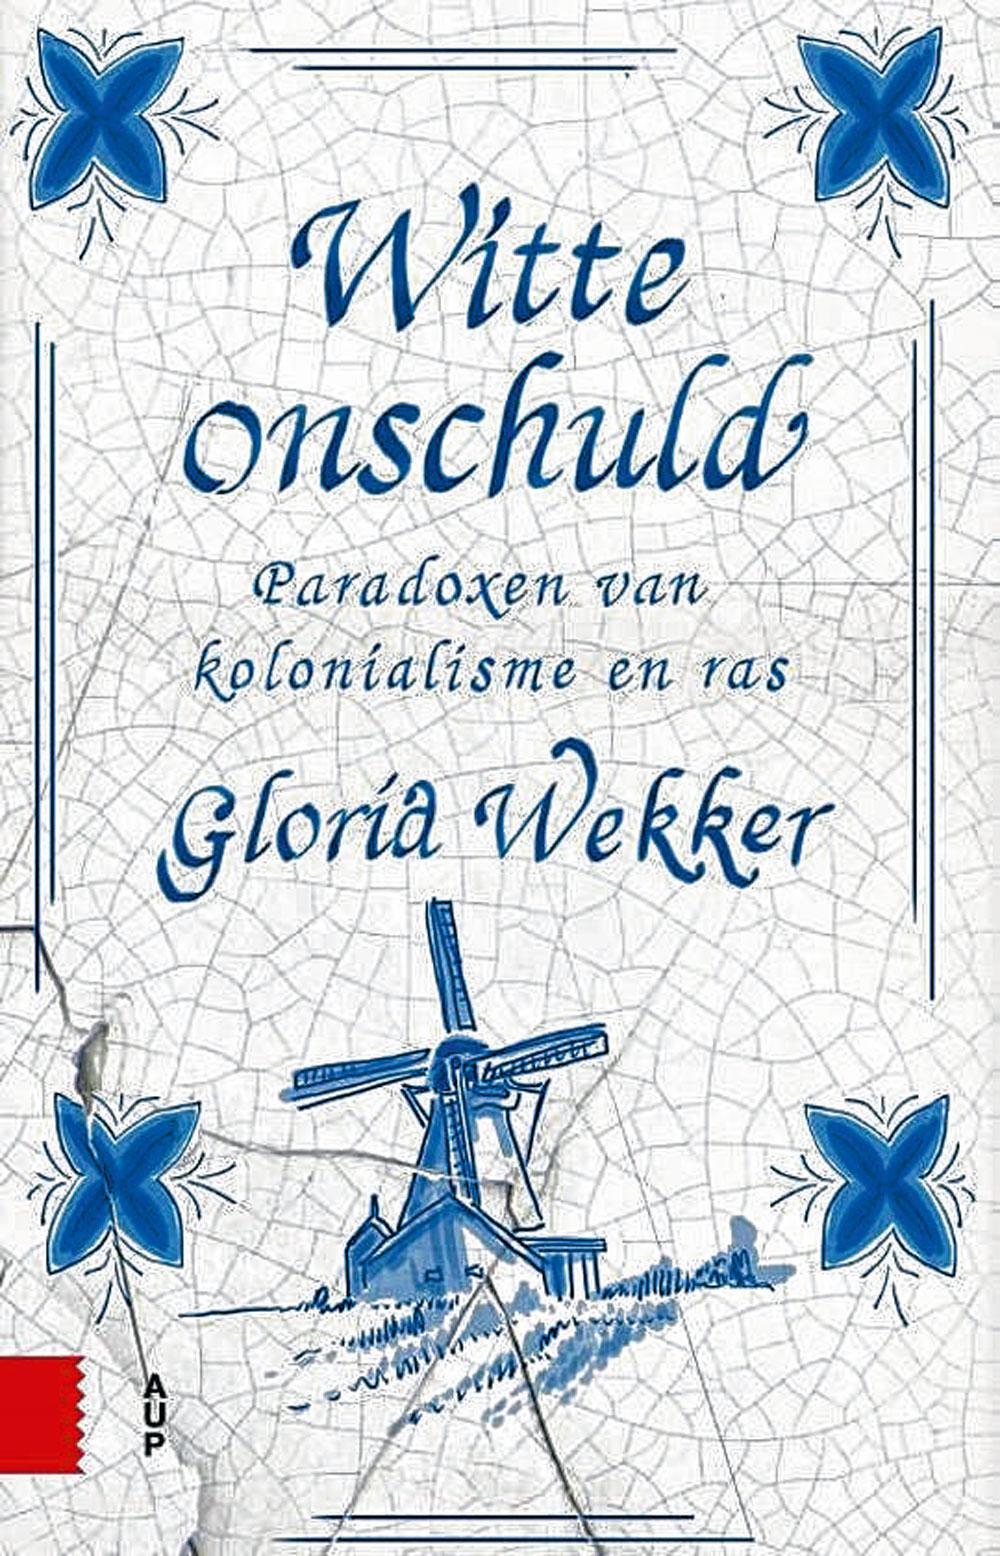 Gloria Wekker, Witte onschuld: paradoxen van kolonialisme en ras, Amsterdam University Press, 343 blz., 17,99 euro.